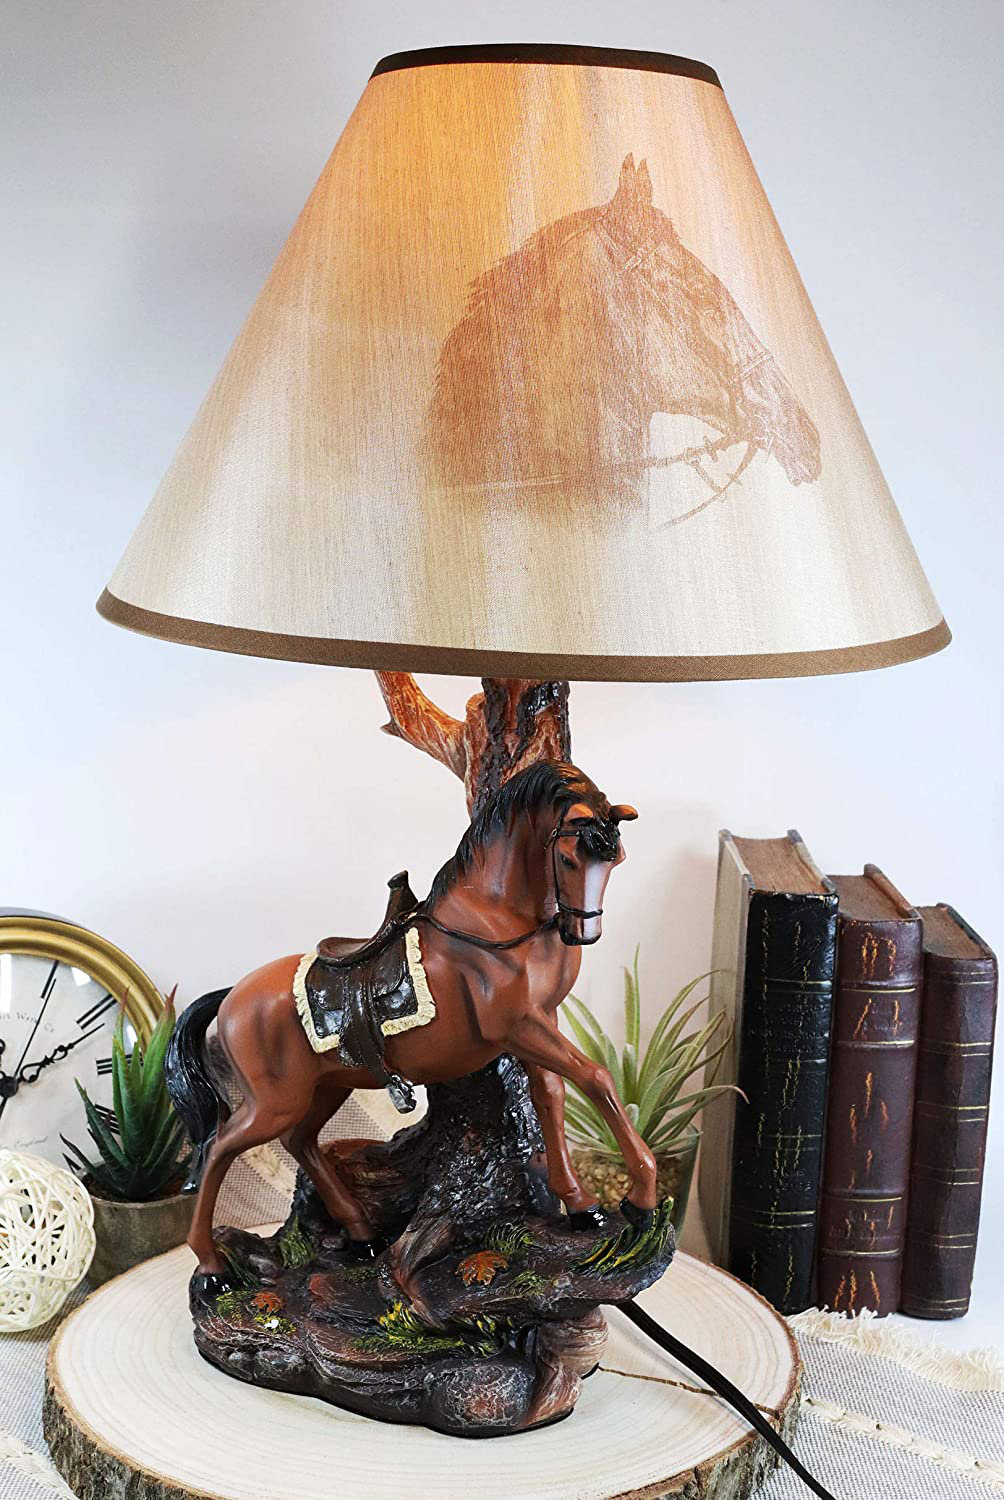 Wildwood Dignified Porcelain Table Lamp & Reviews